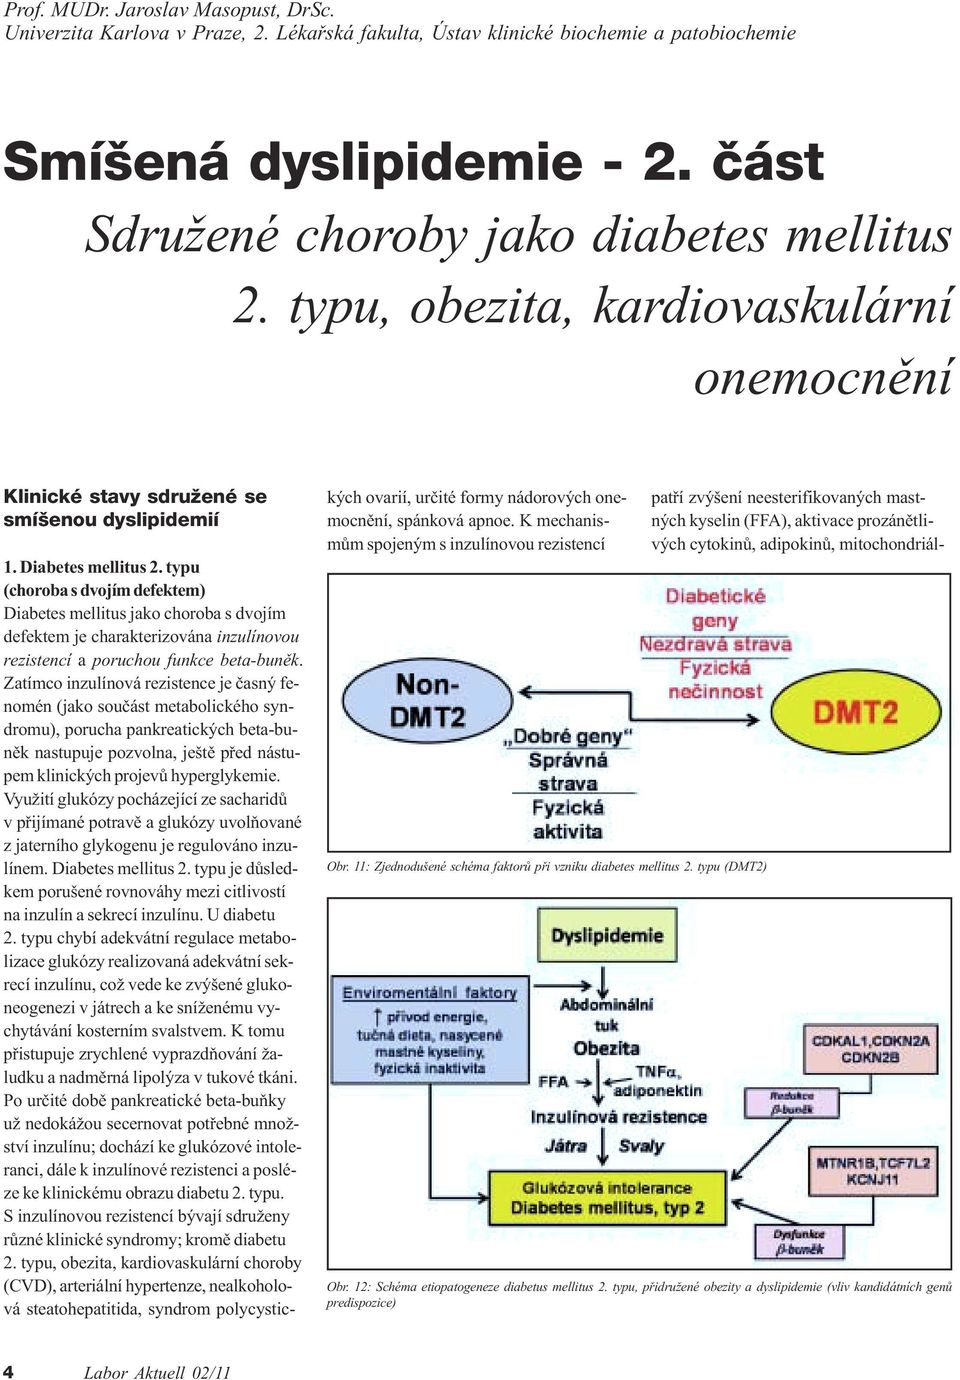 typu (choroba s dvojím defektem) Diabetes mellitus jako choroba s dvojím defektem je charakterizována inzulínovou rezistencí a poruchou funkce beta-bunìk.